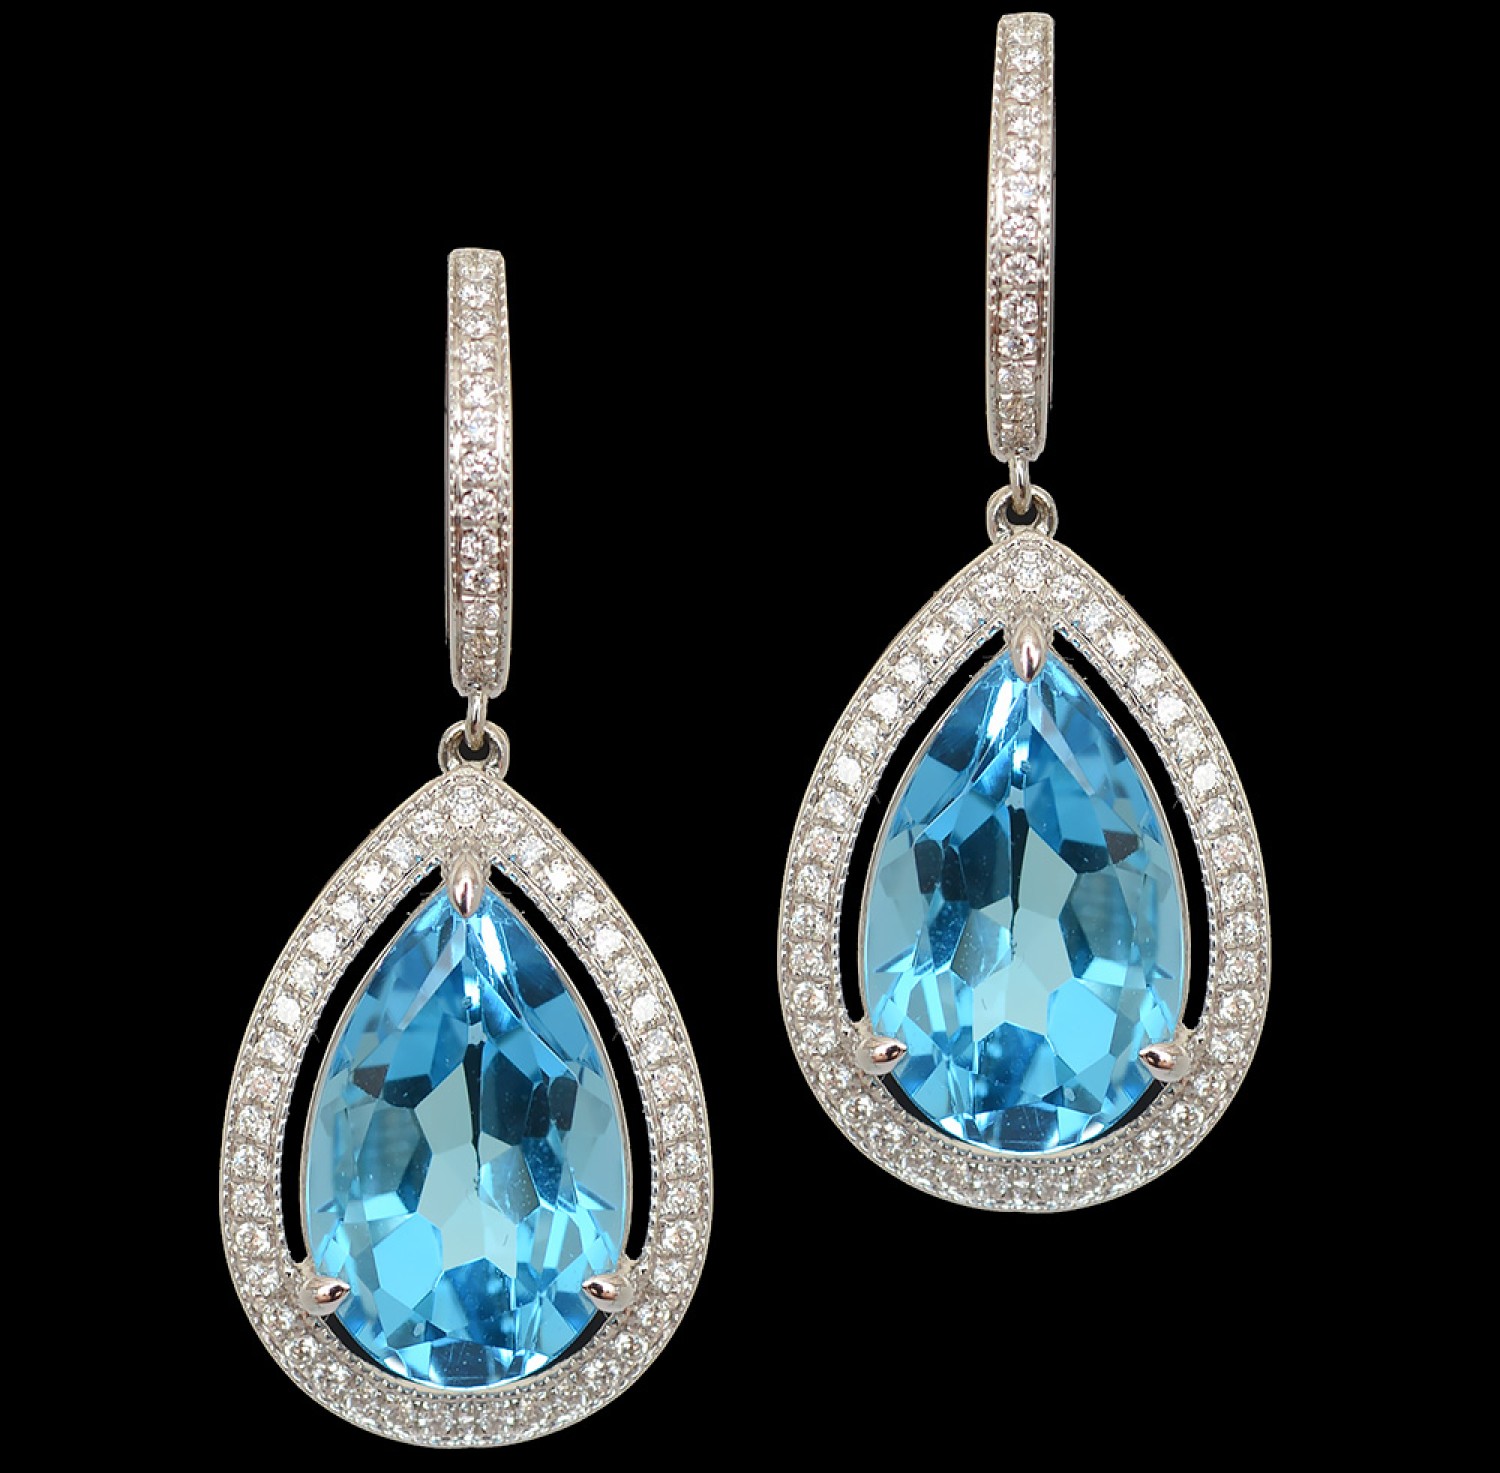 Antique Jewellery » 18ct Blue Topaz and Diamond Drop earrings